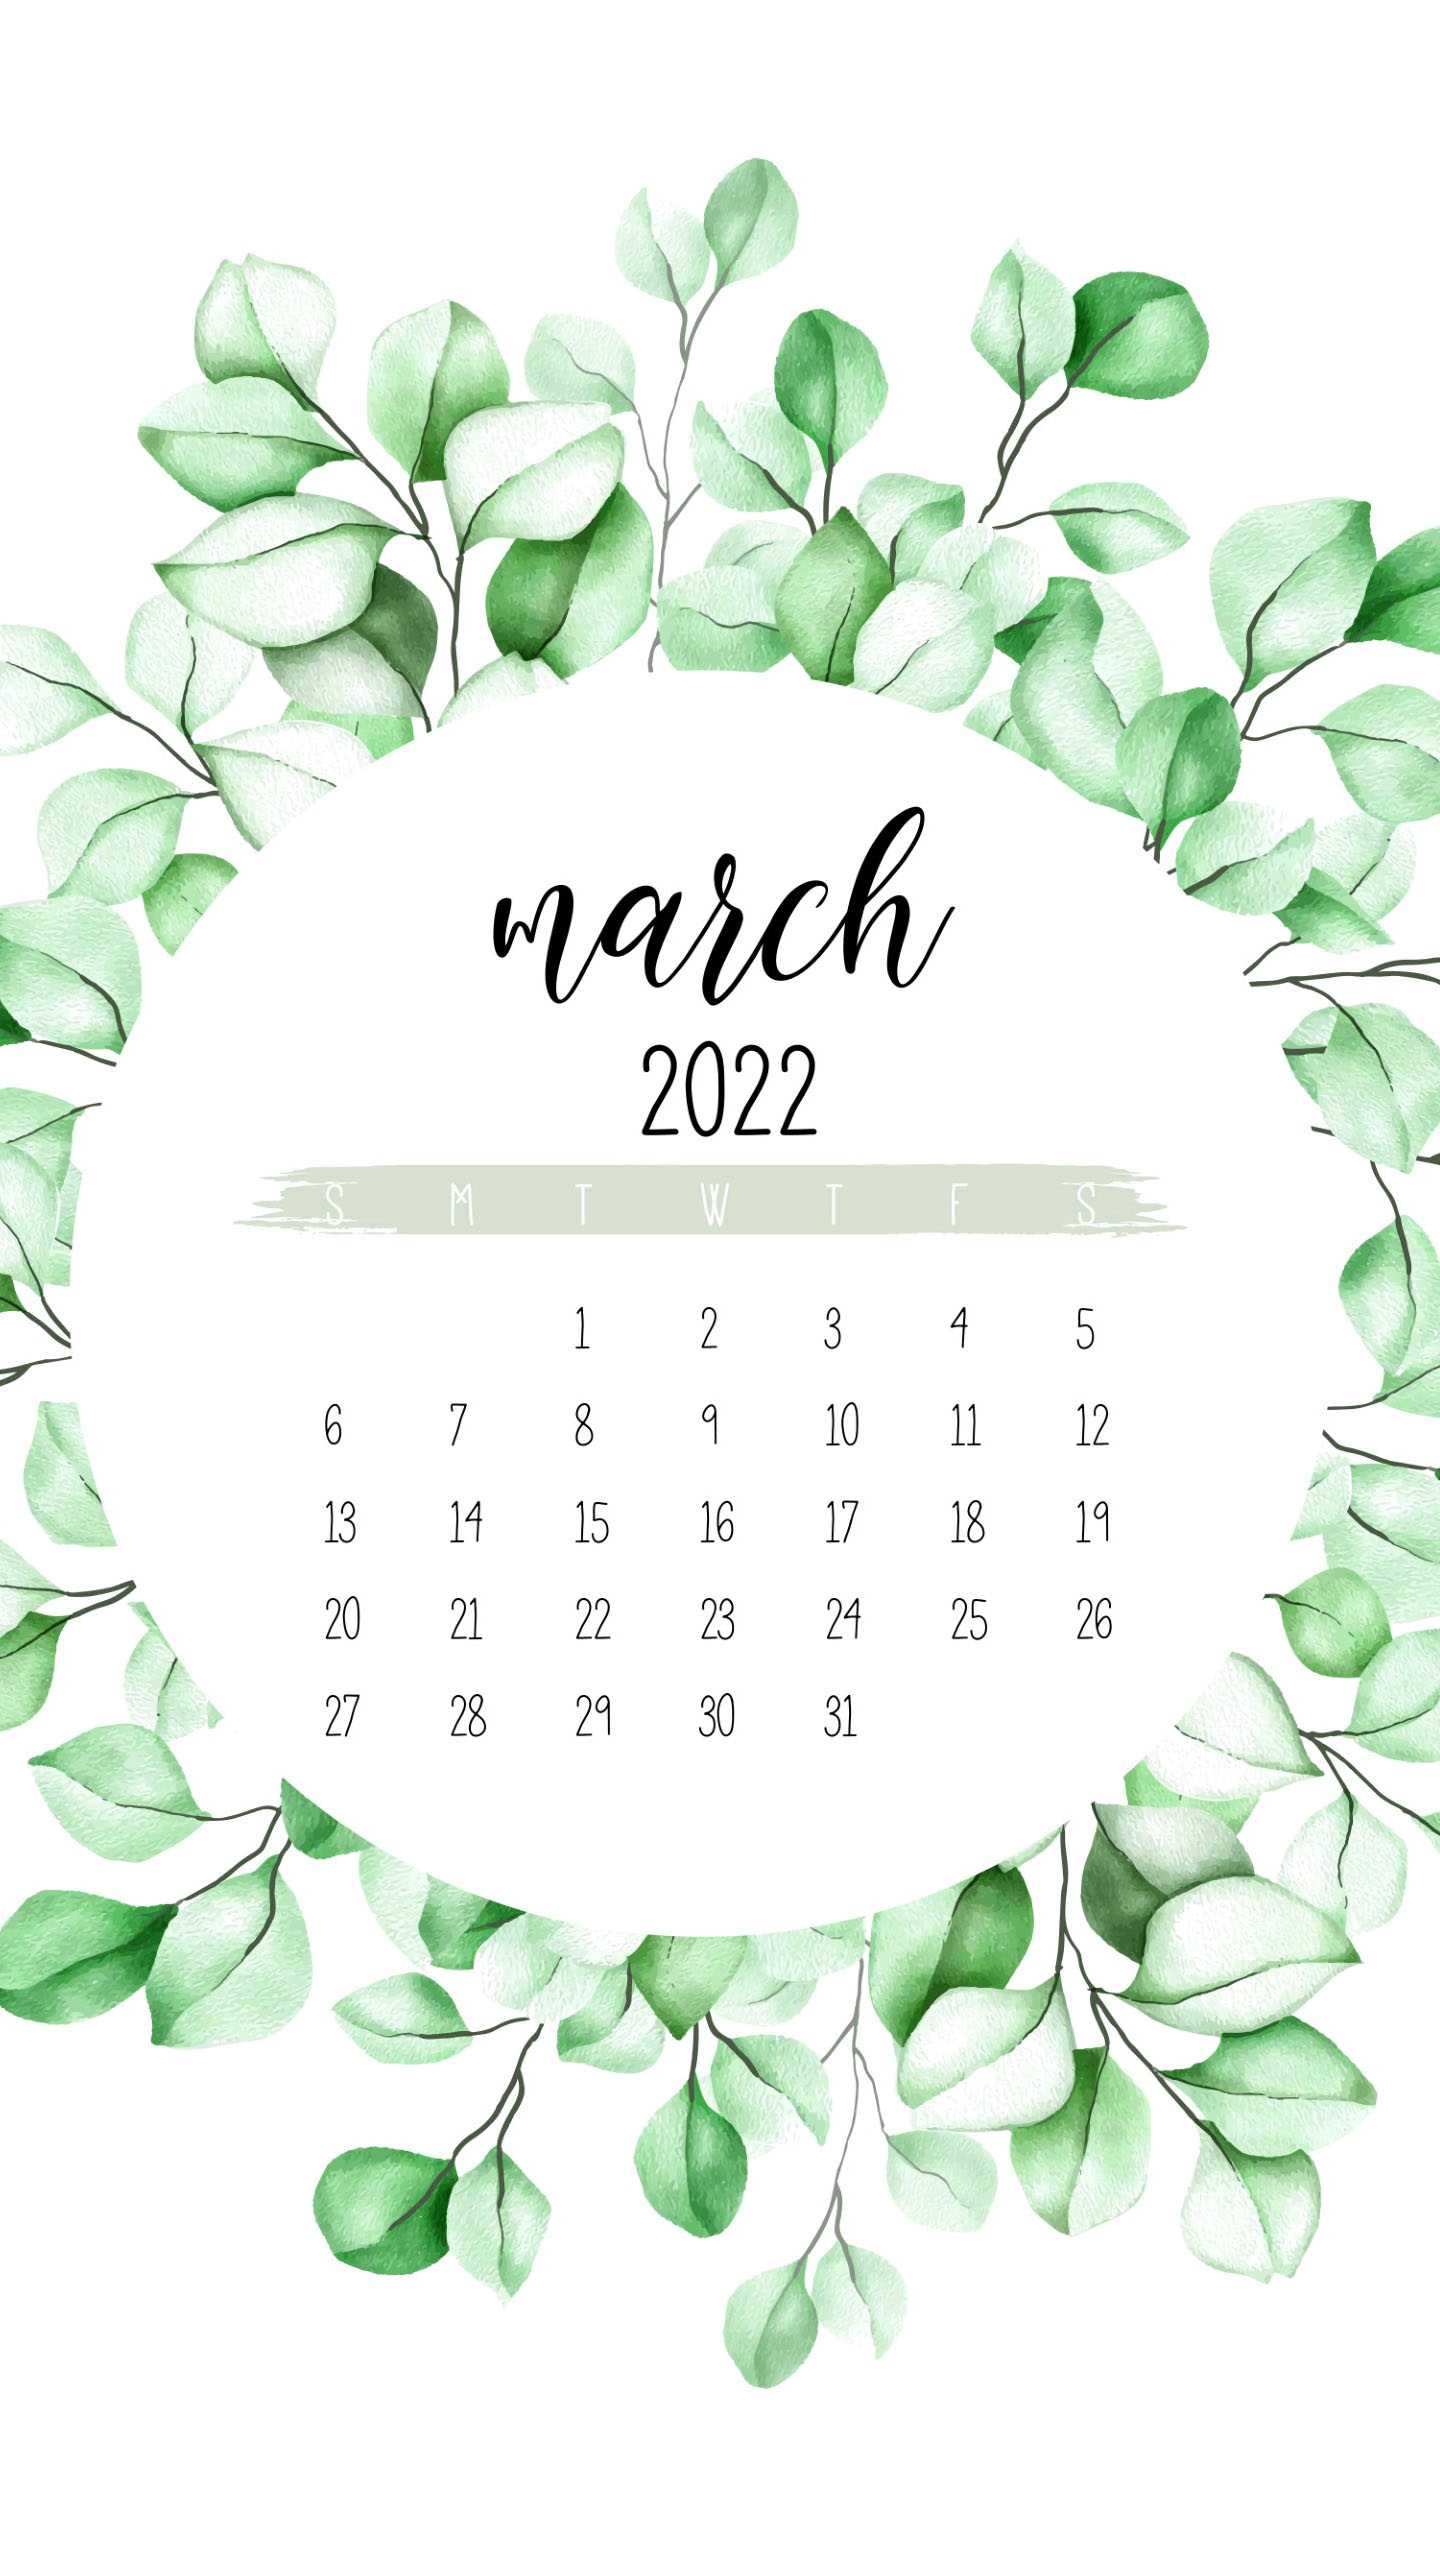 March 2022 Wallpaper Calendar March 2022 Calendar Wallpaper - Ixpap